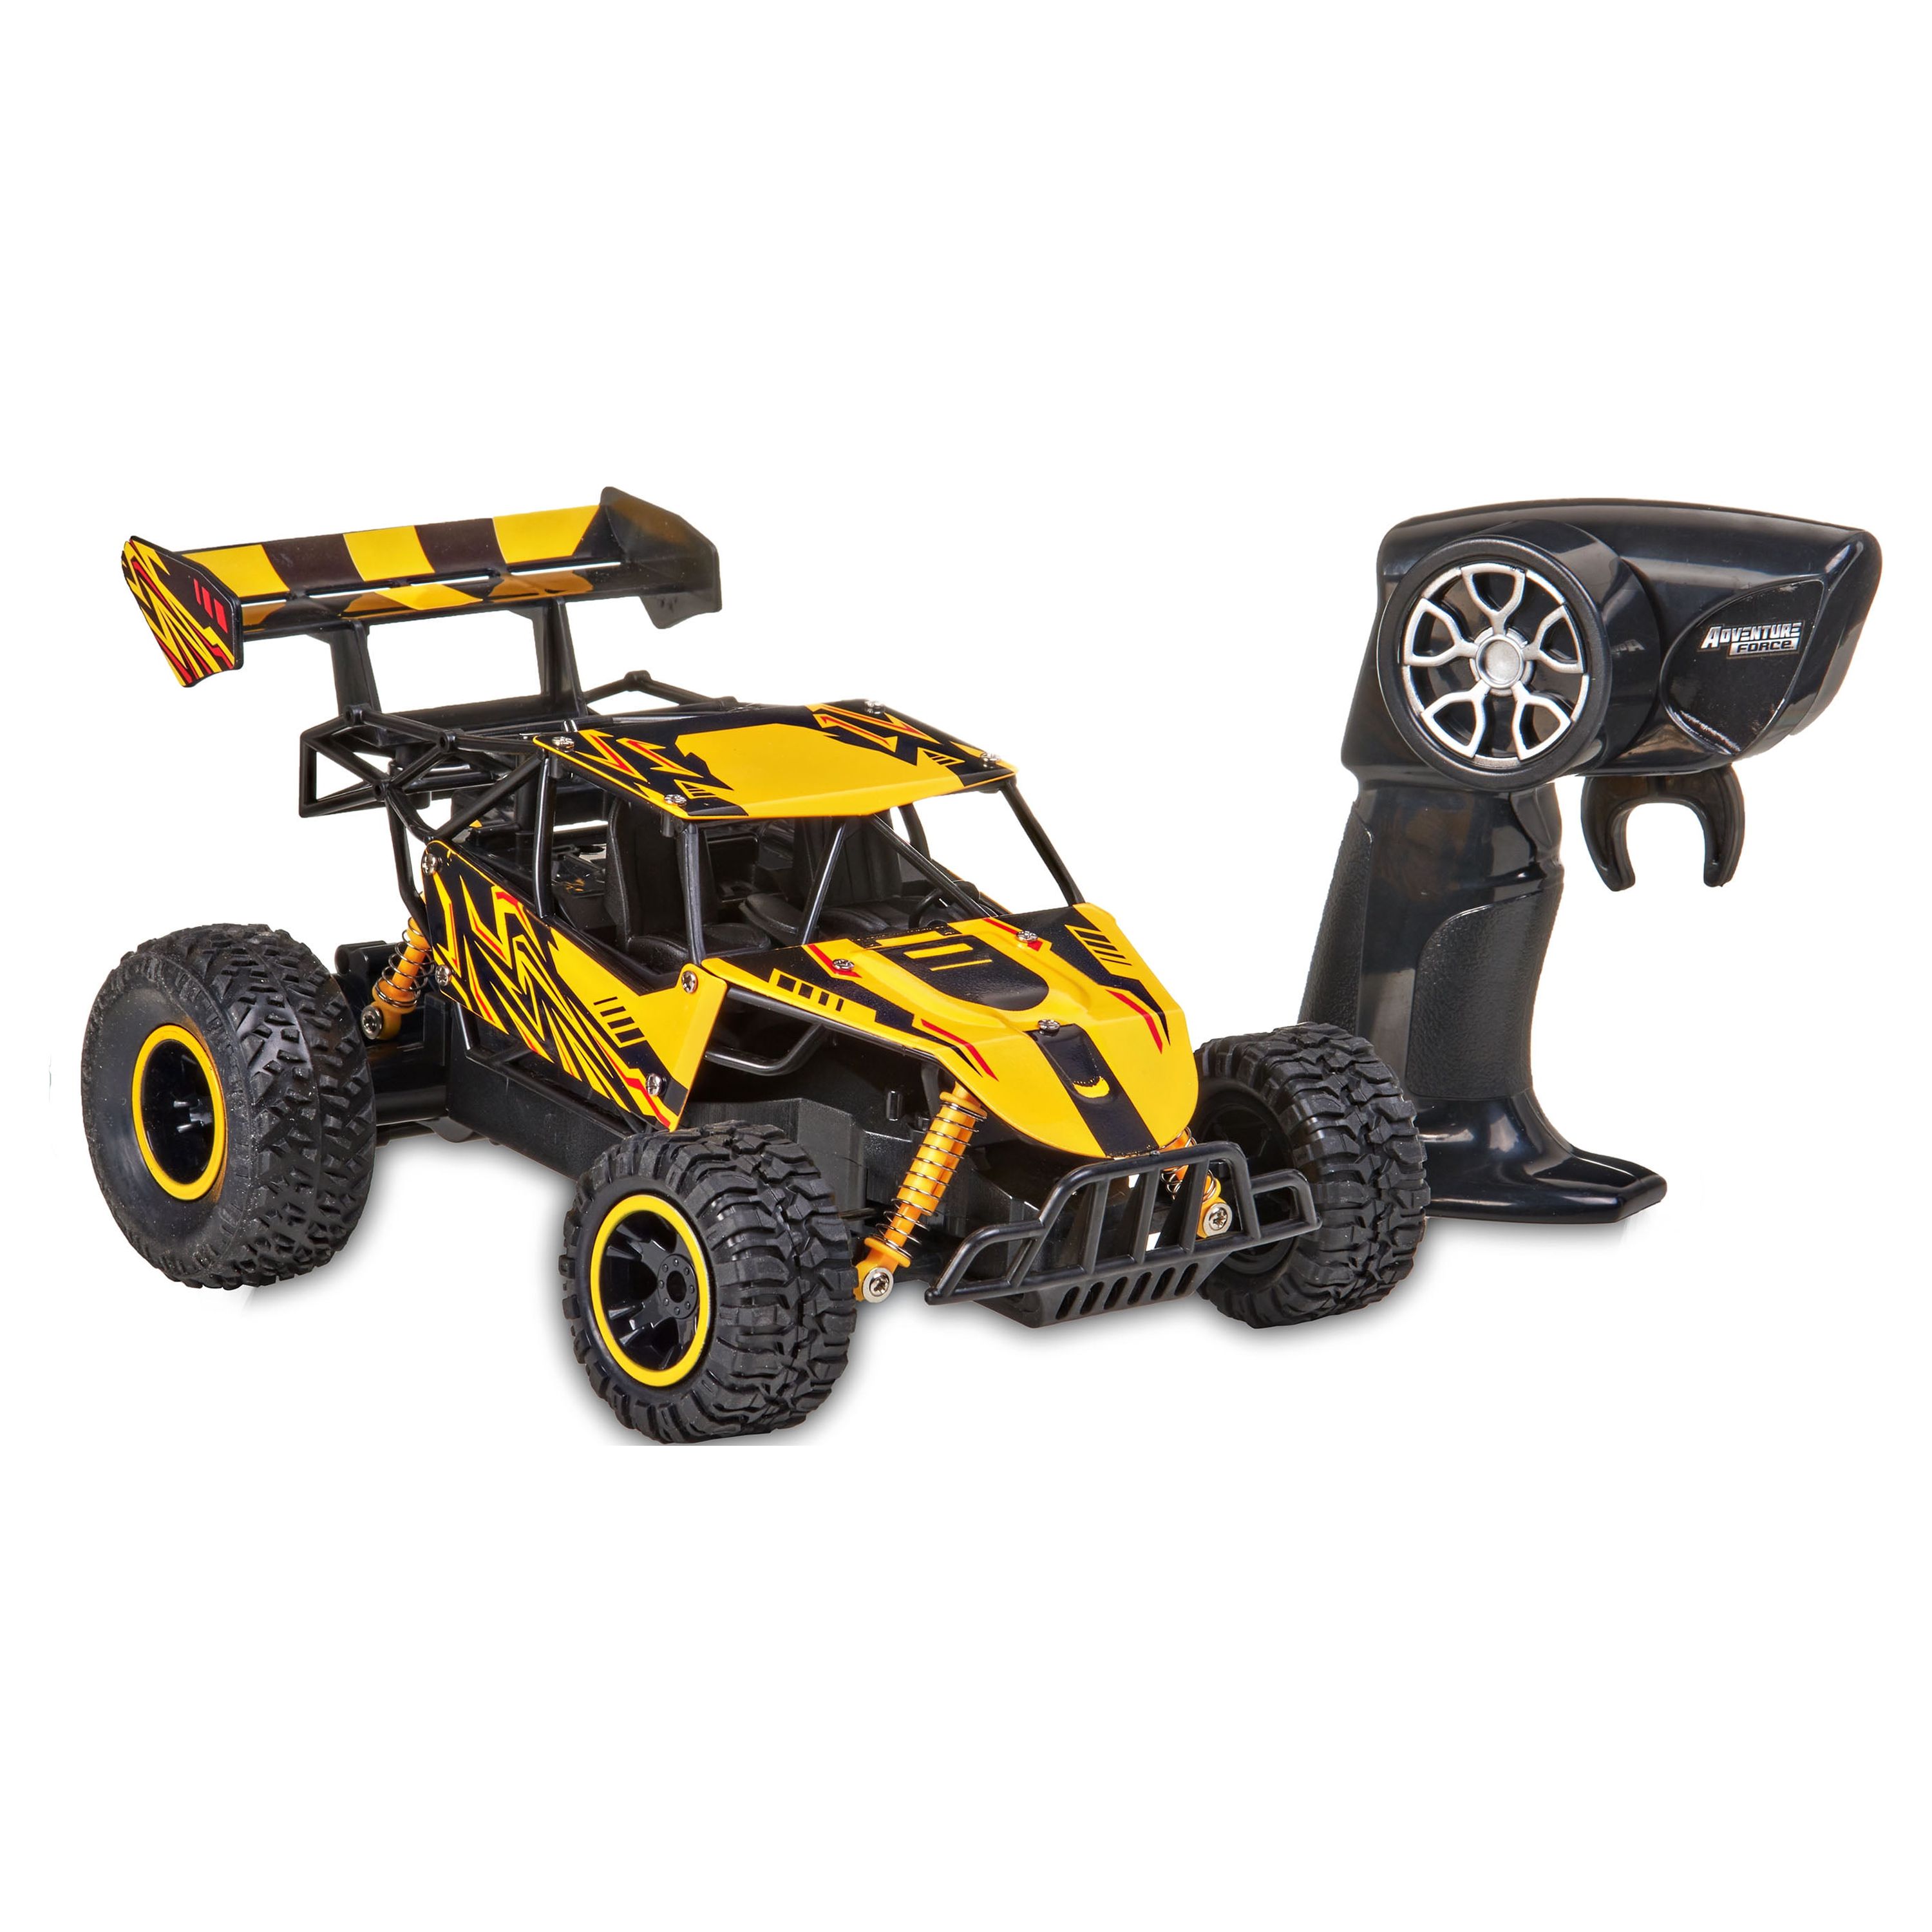 Adventure Force Metal Racer Radio Controlled Vehicle, Yellow - Walmart.com